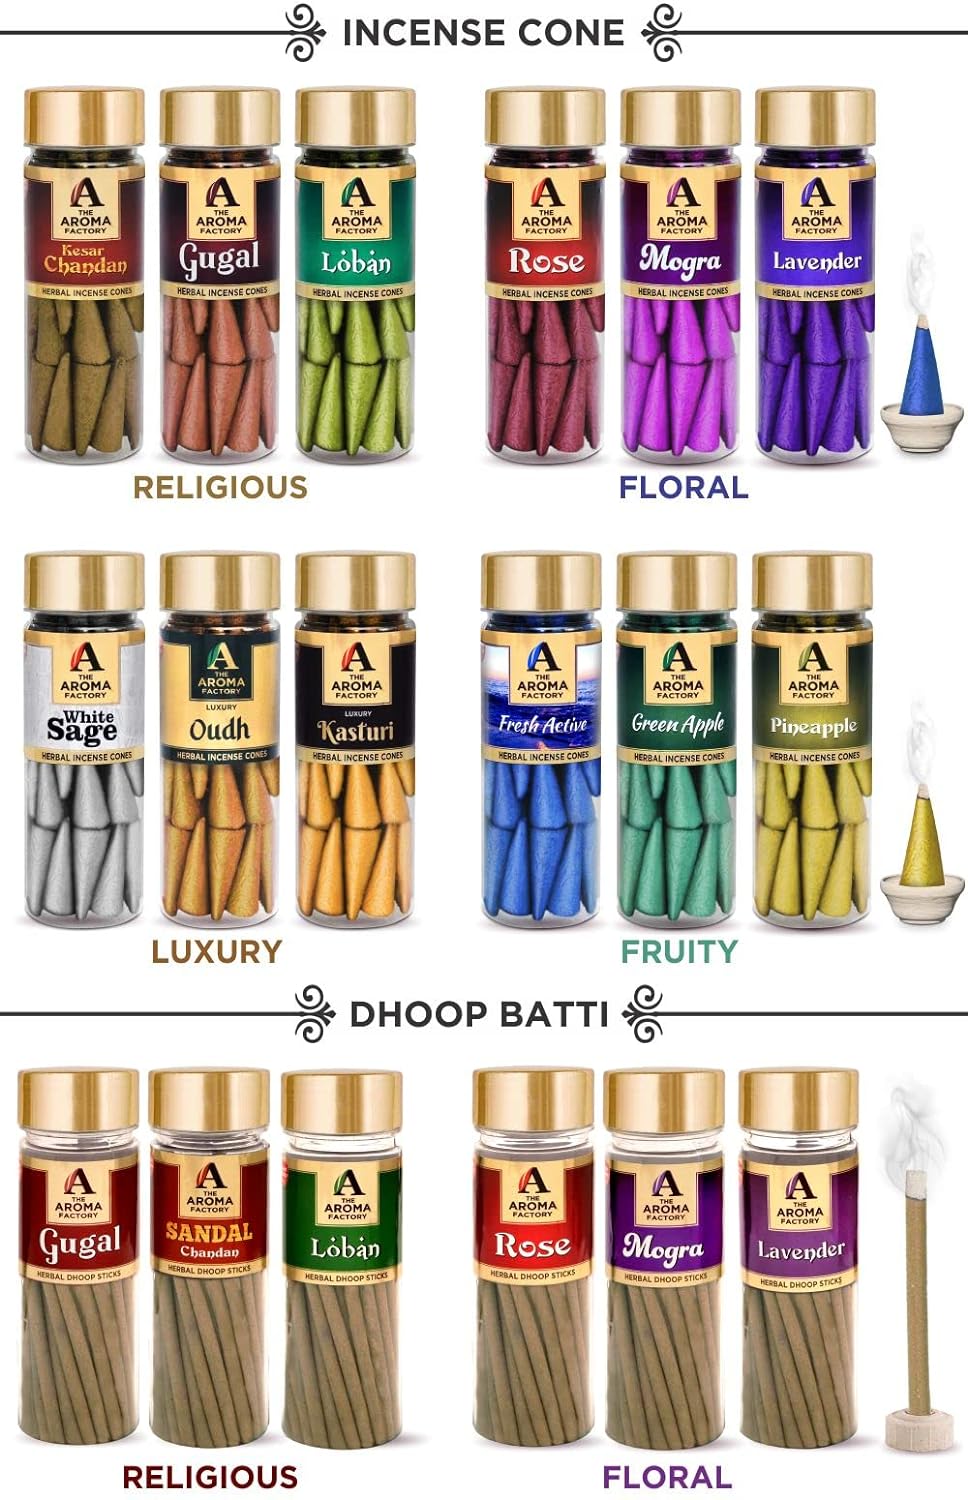 The Aroma Factory Incense Dhoop Cone for Puja, Kesar Chandan & Kasturi (100% Herbal & 0% Charcoal) 2 Bottles x 30 Cones